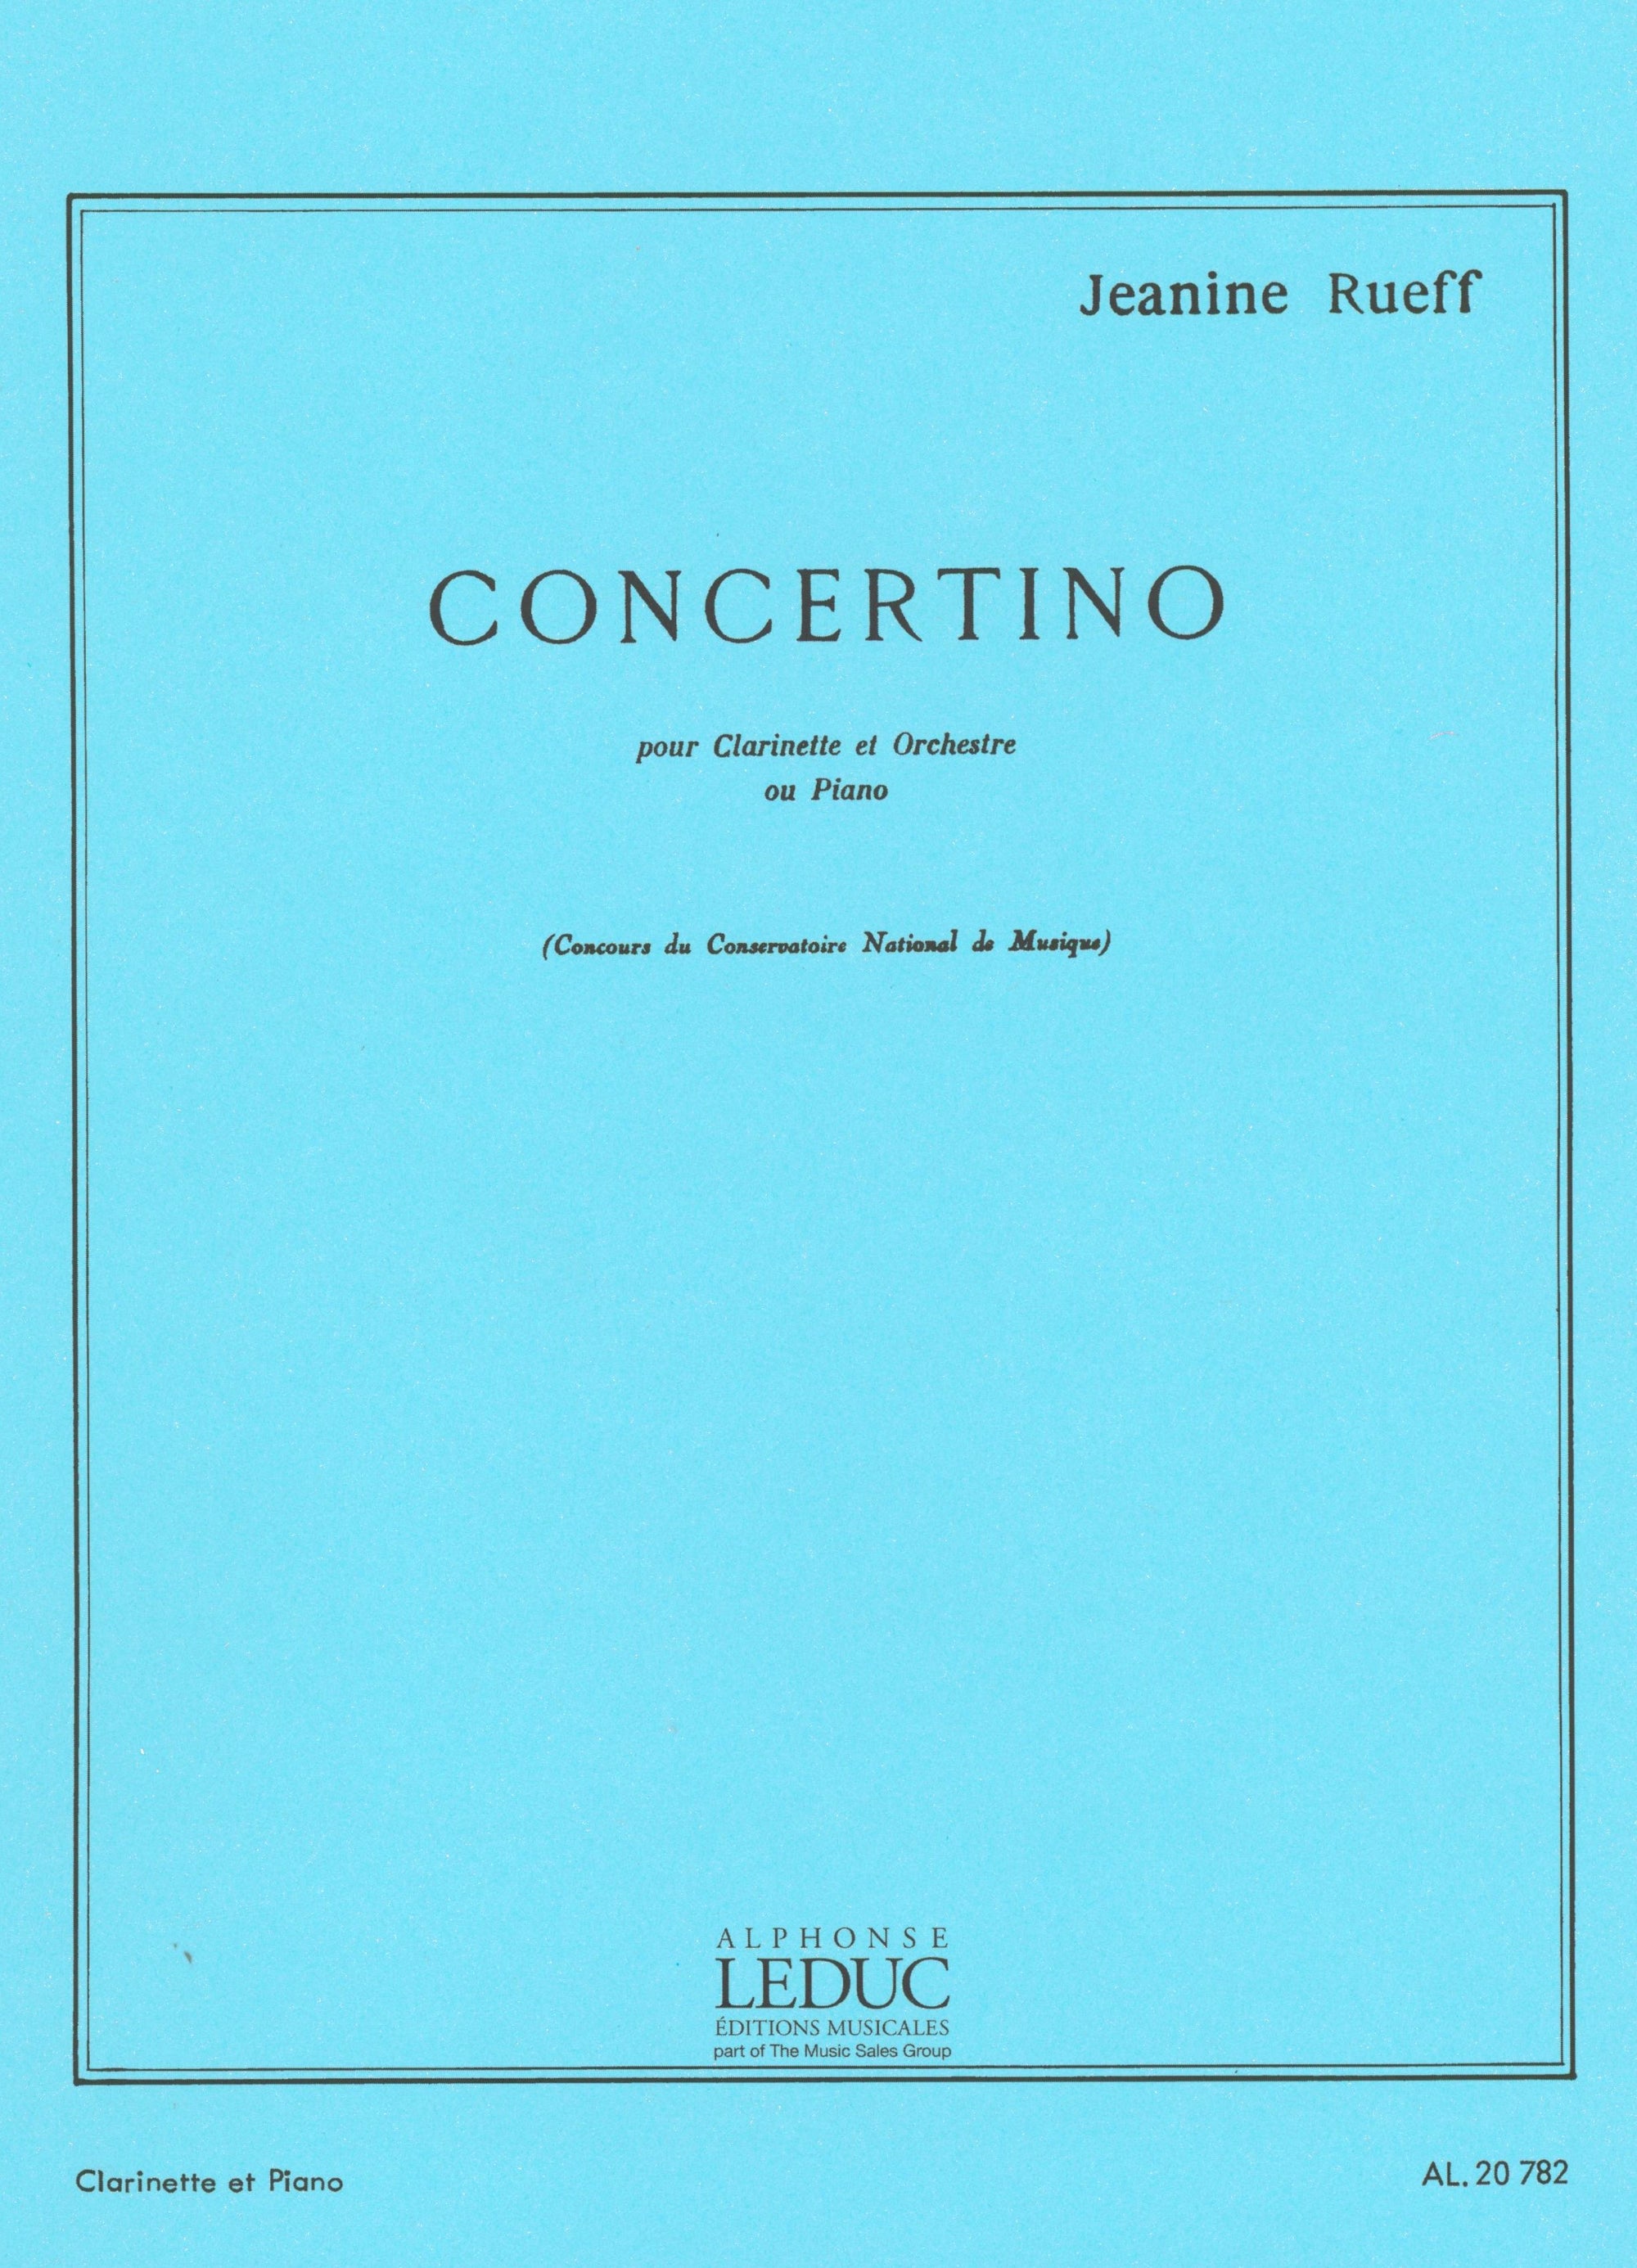 Rueff: Clarinet Concertino, Op. 15